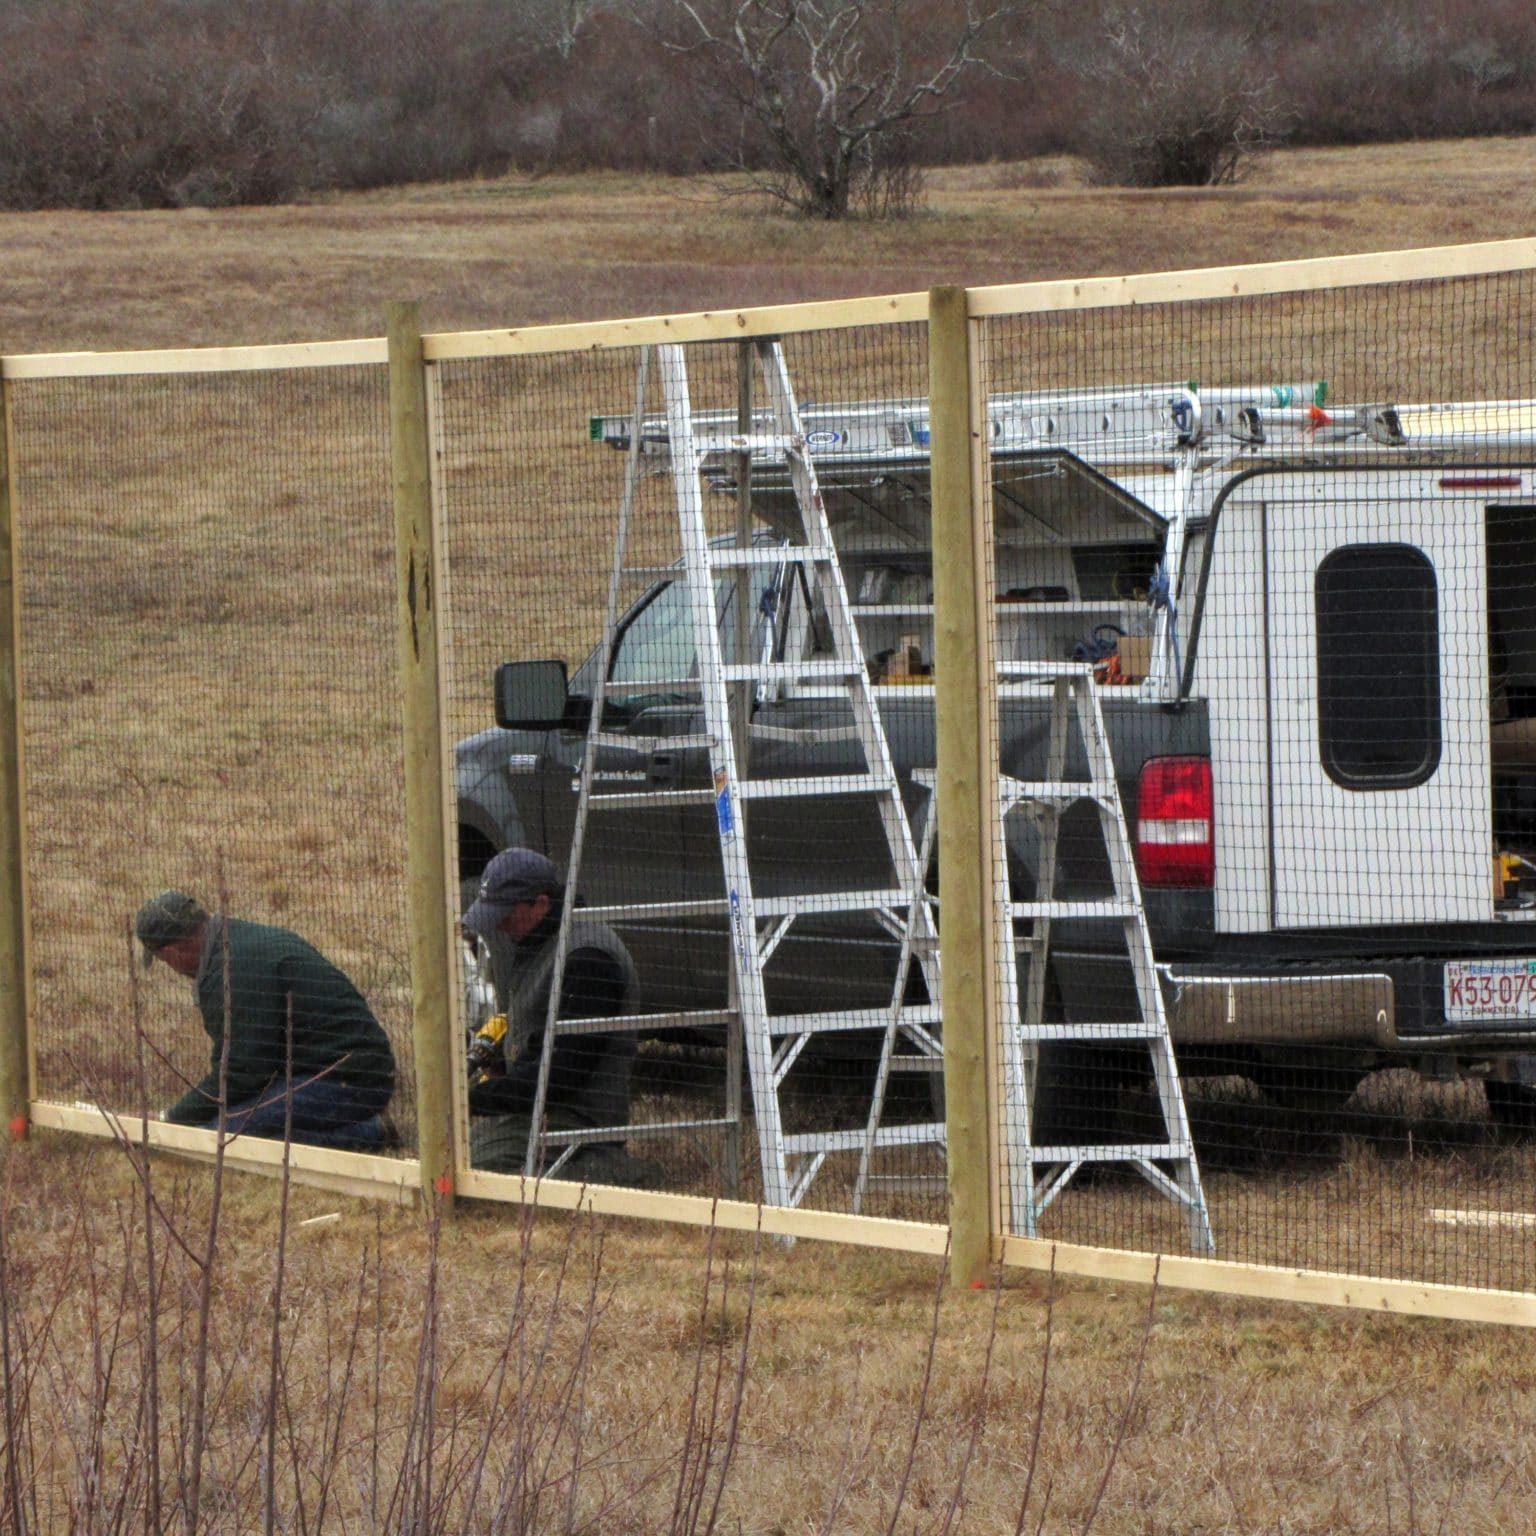 Sanford Deer Fence Construction, 4 12 12,KAO (6)